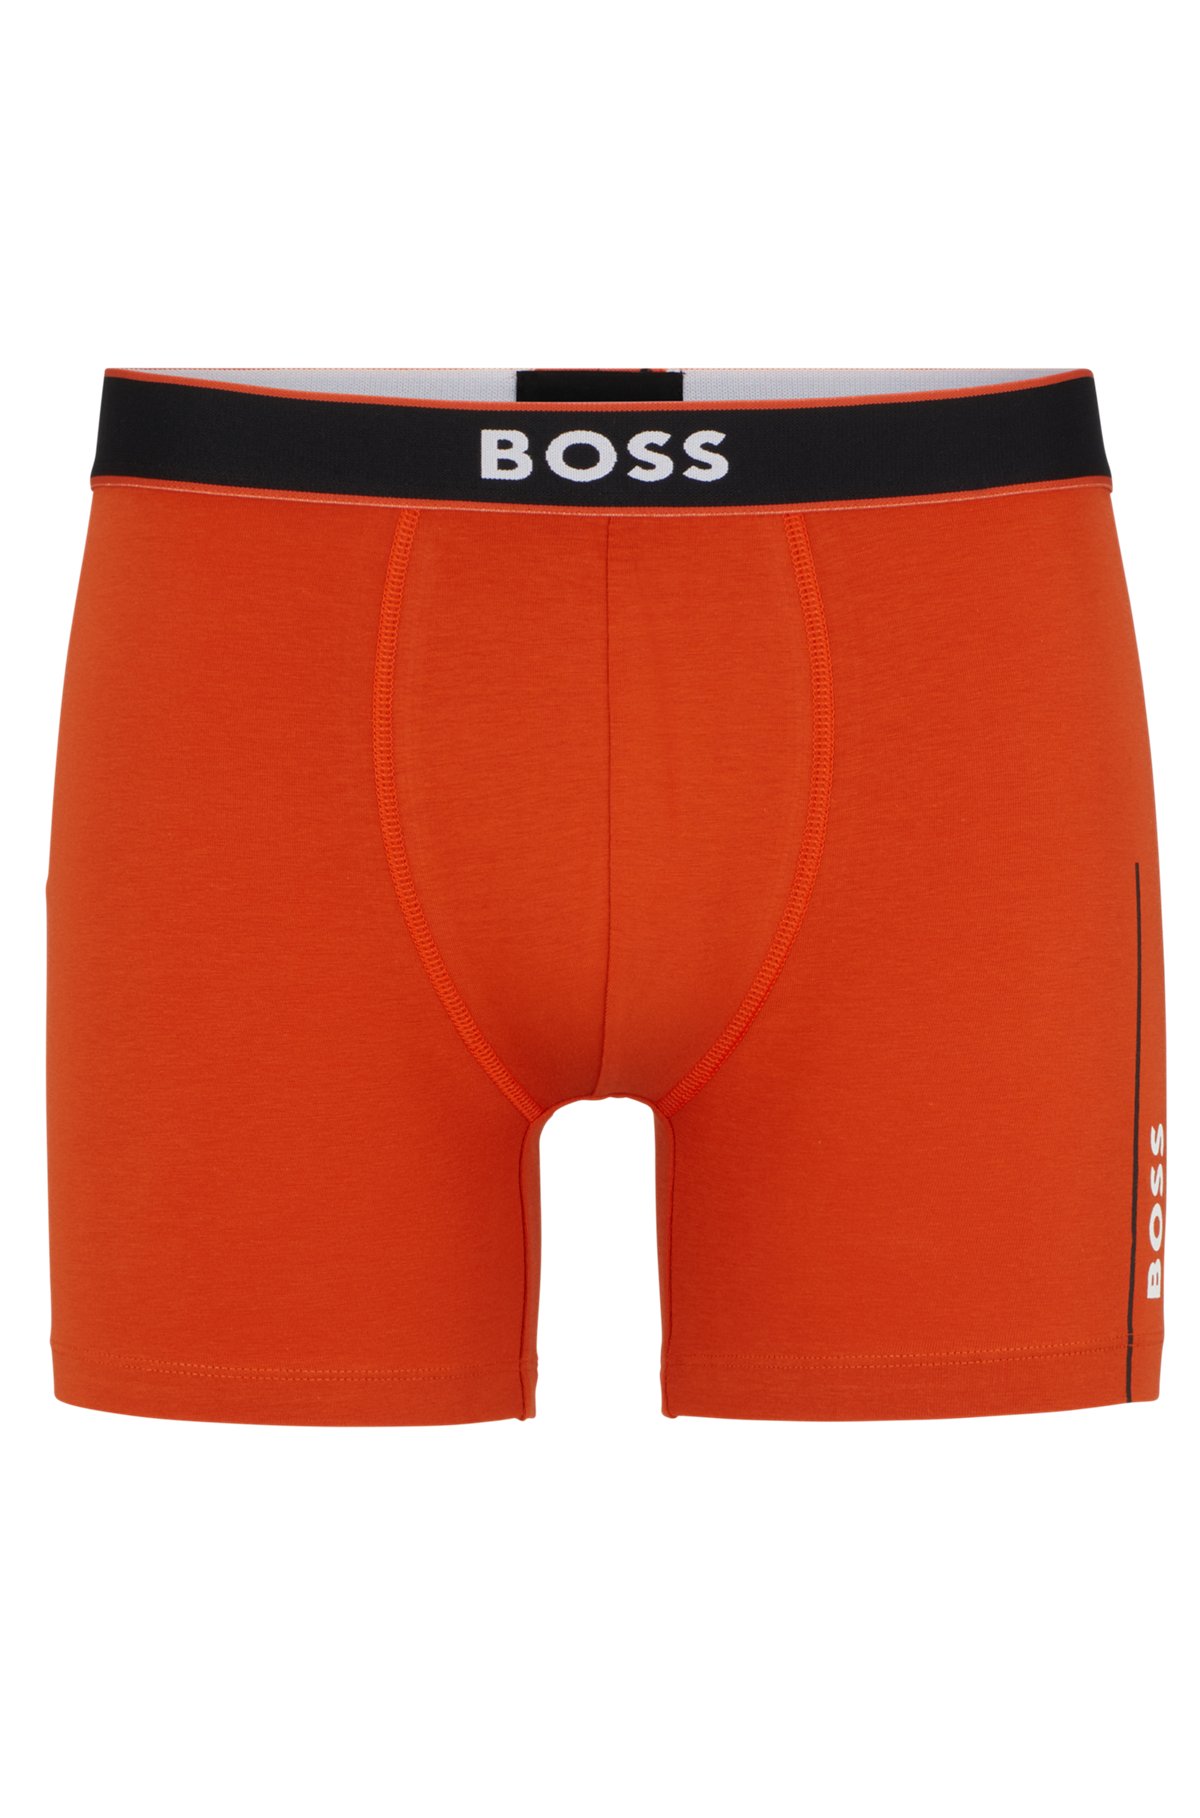 Boss Underwear Sticker by Woxer